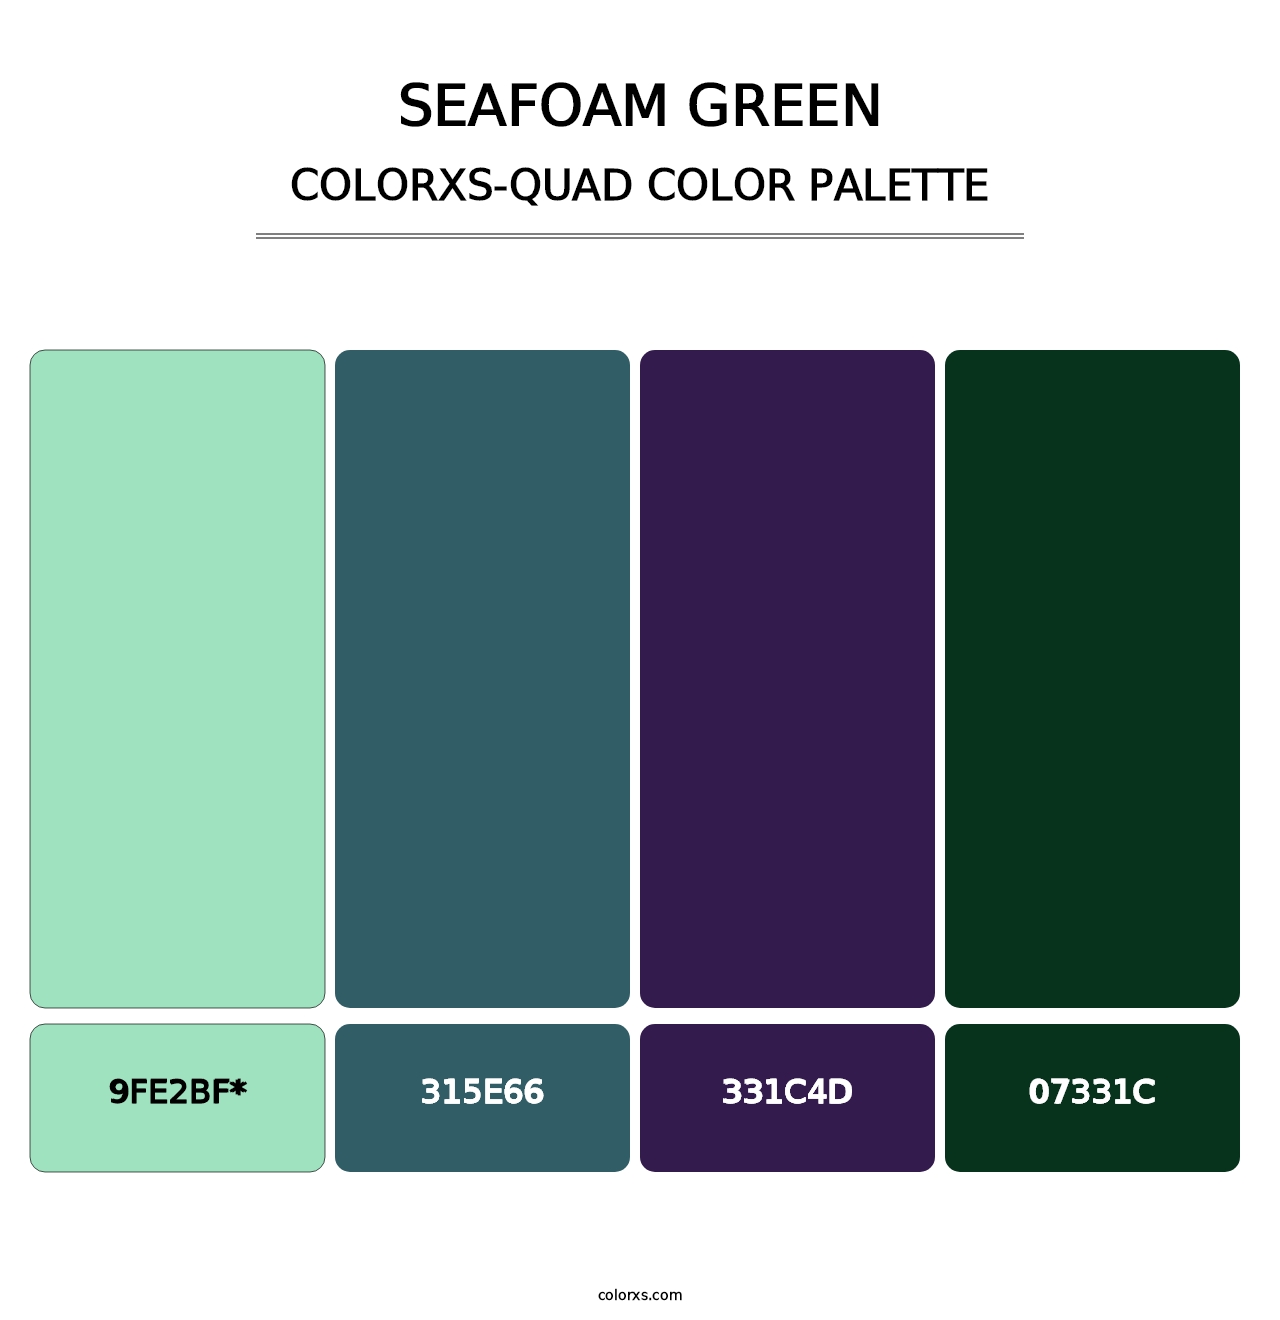 Seafoam Green - Colorxs Quad Palette